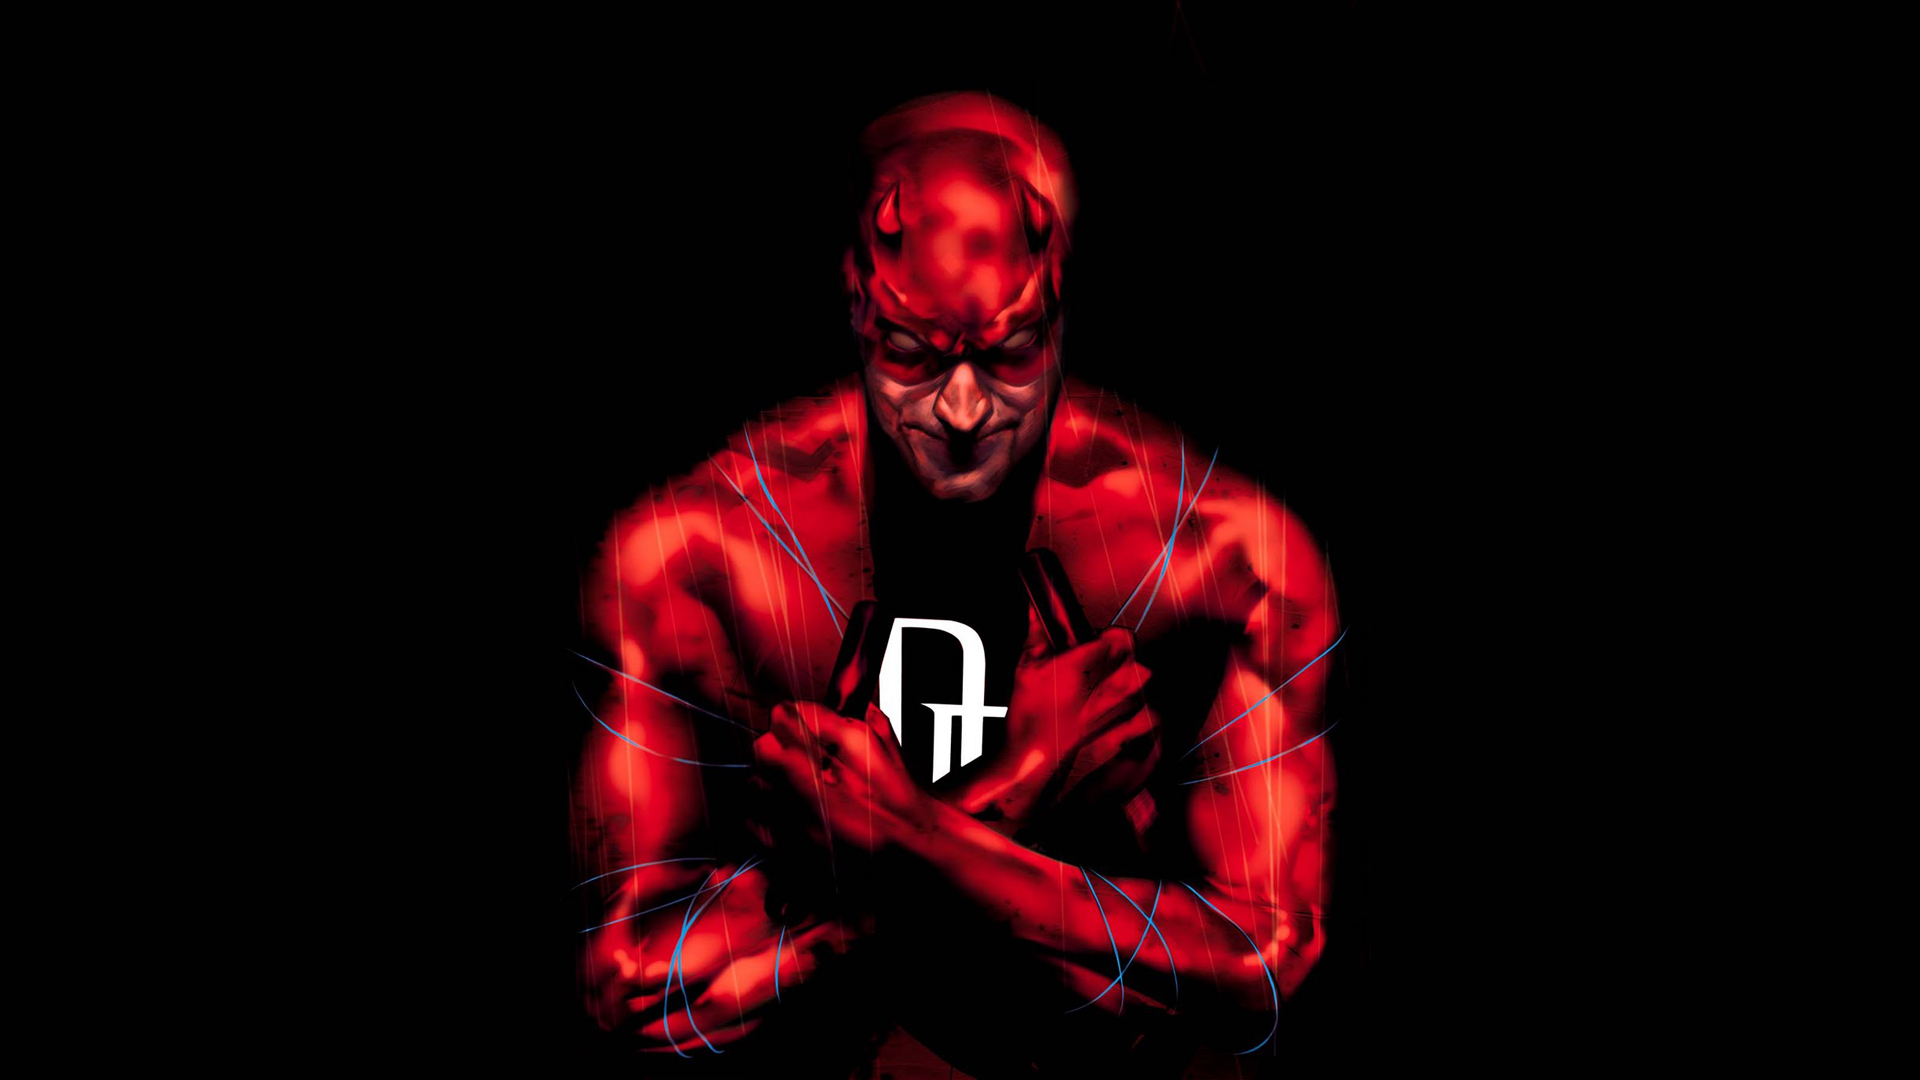 17 Daredevil Marvel Superhero Wallpaper HD Collections - Yoanu.com